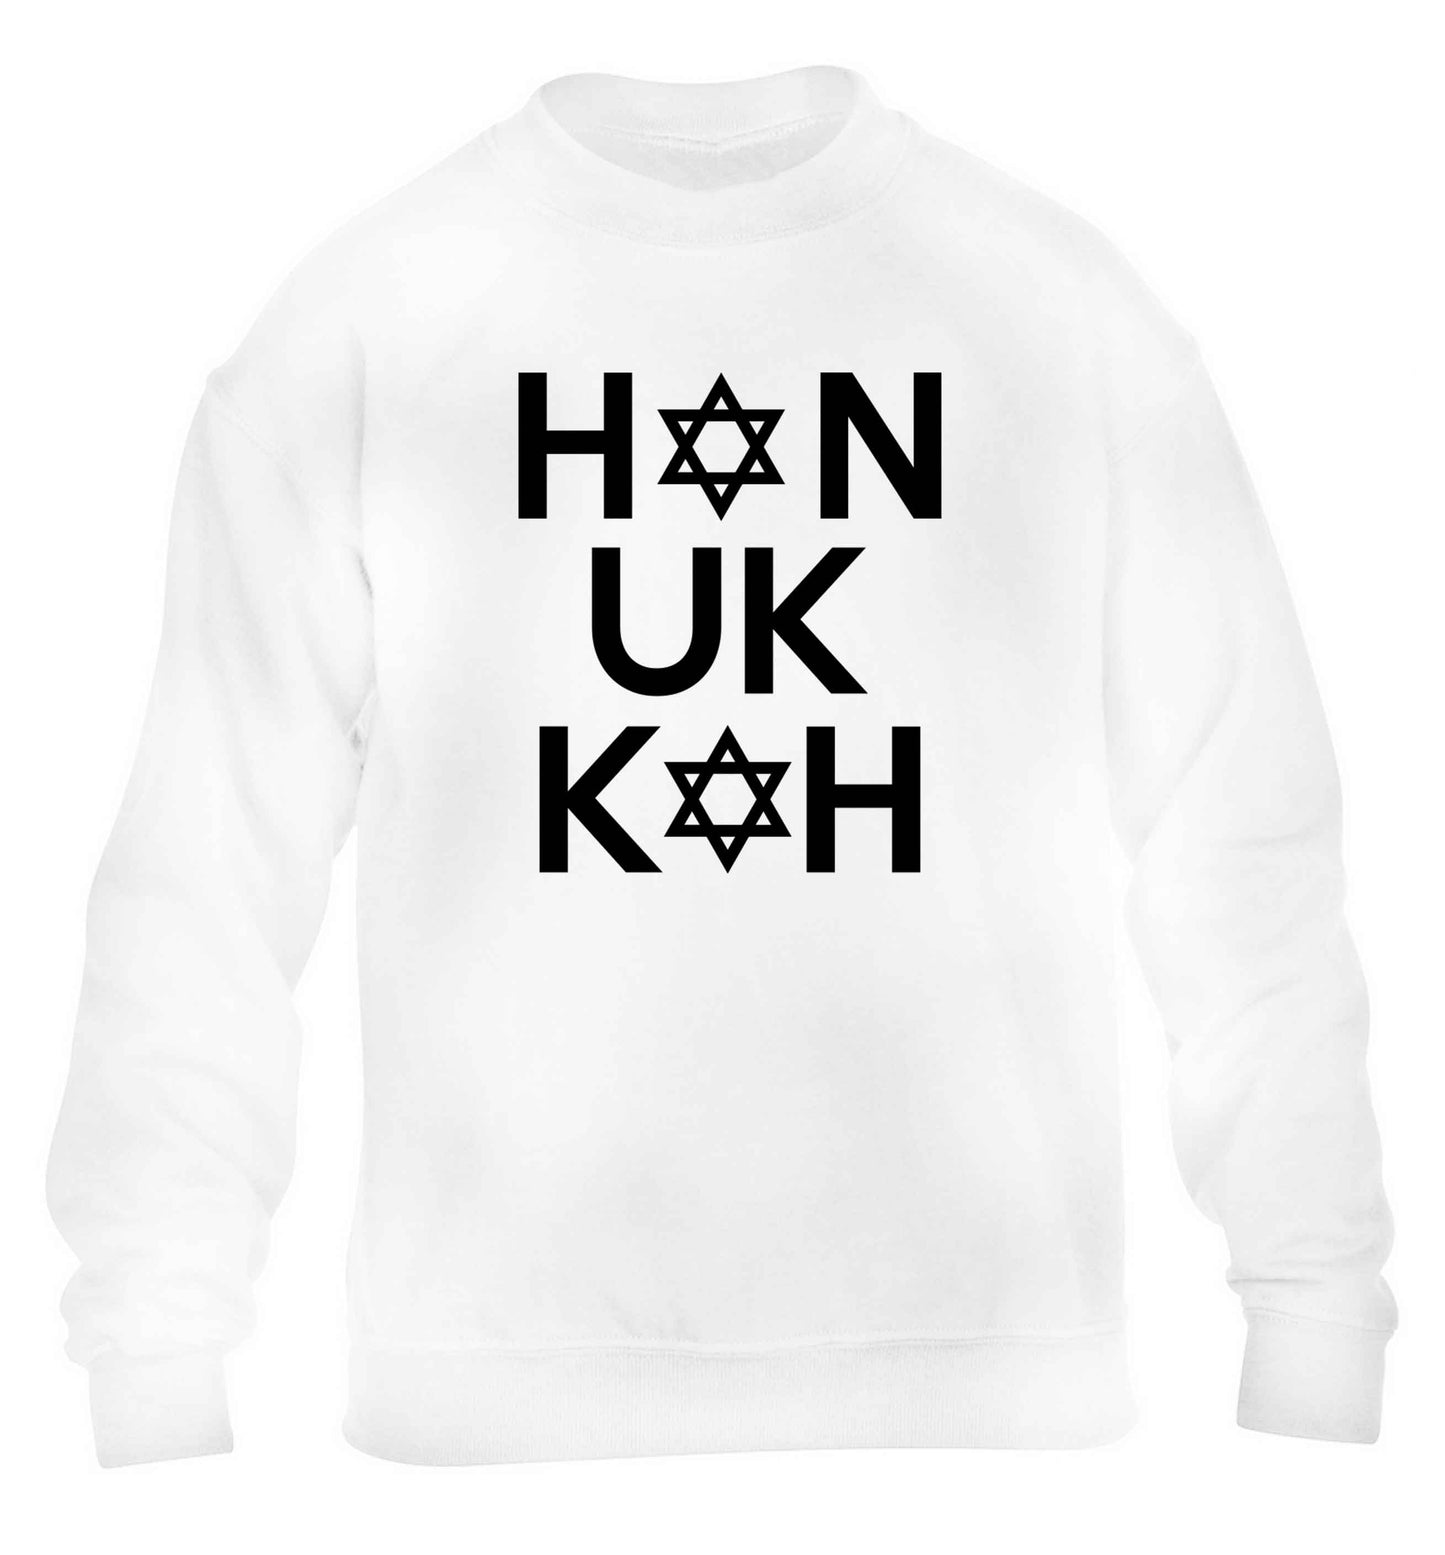 Han uk kah  Hanukkah star of david children's white sweater 12-13 Years